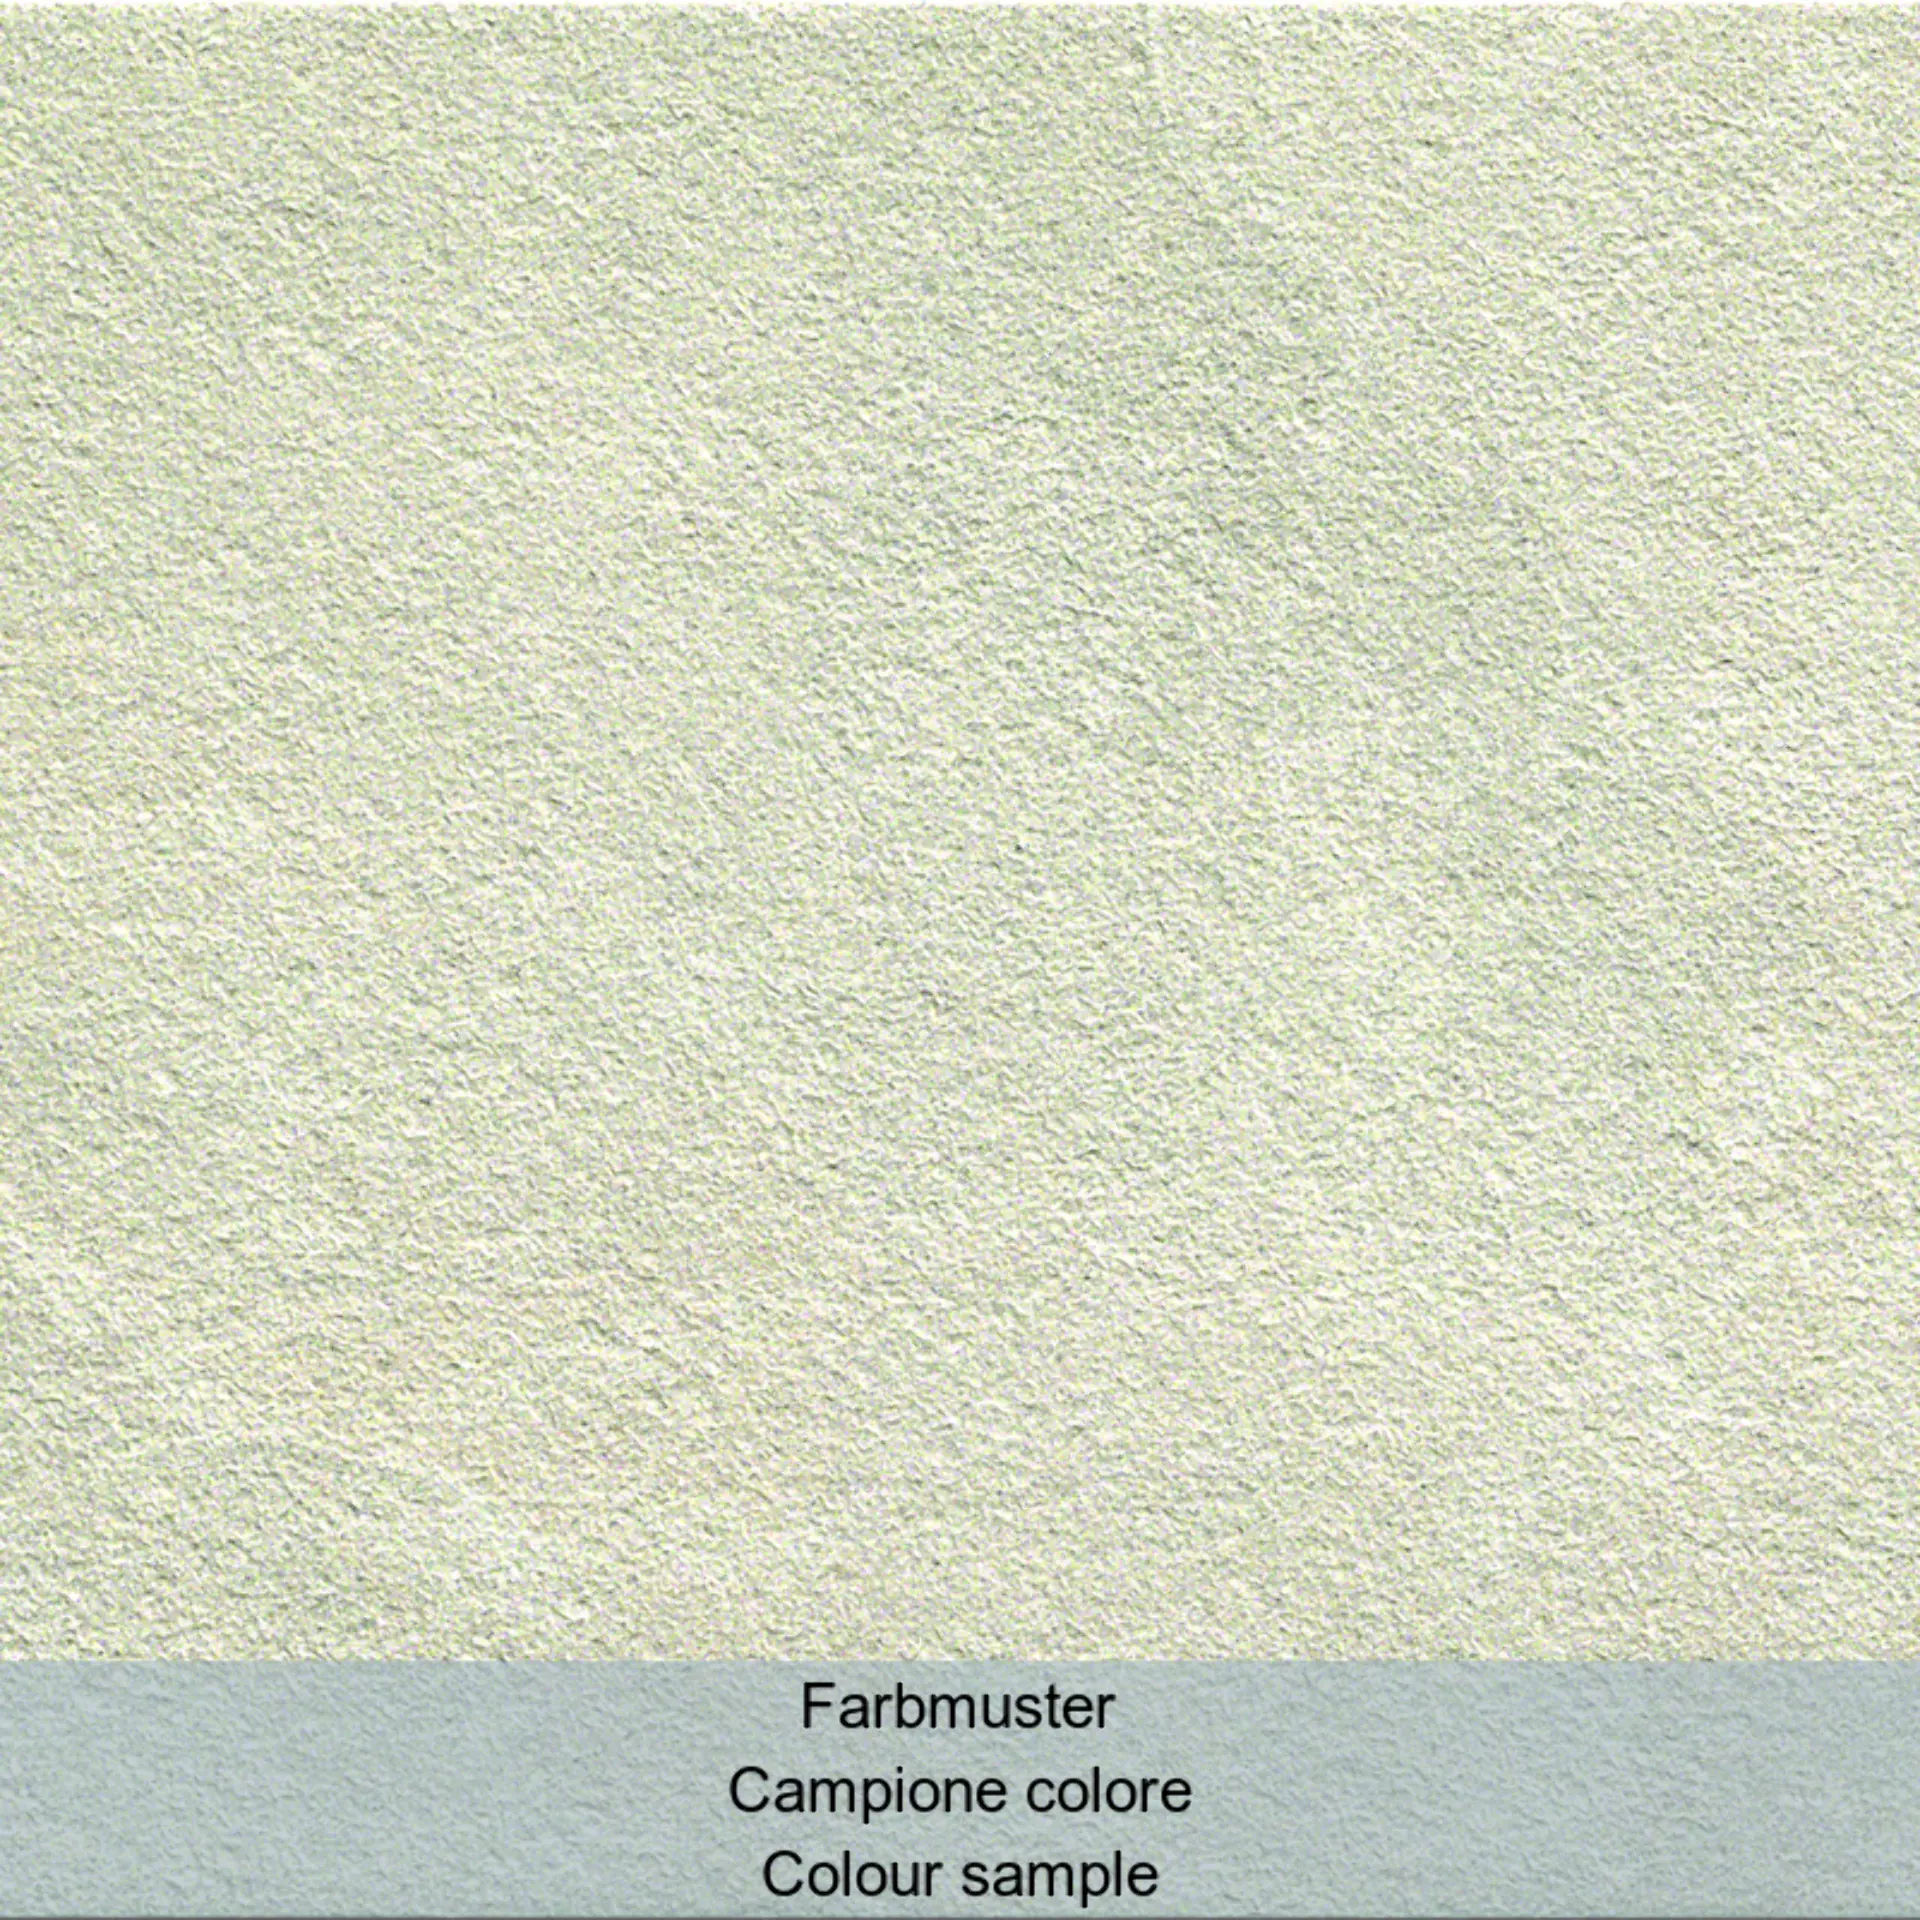 Casalgrande Amazzonia Dragon White Naturale – Matt 4700075 30x30cm rectified 9mm